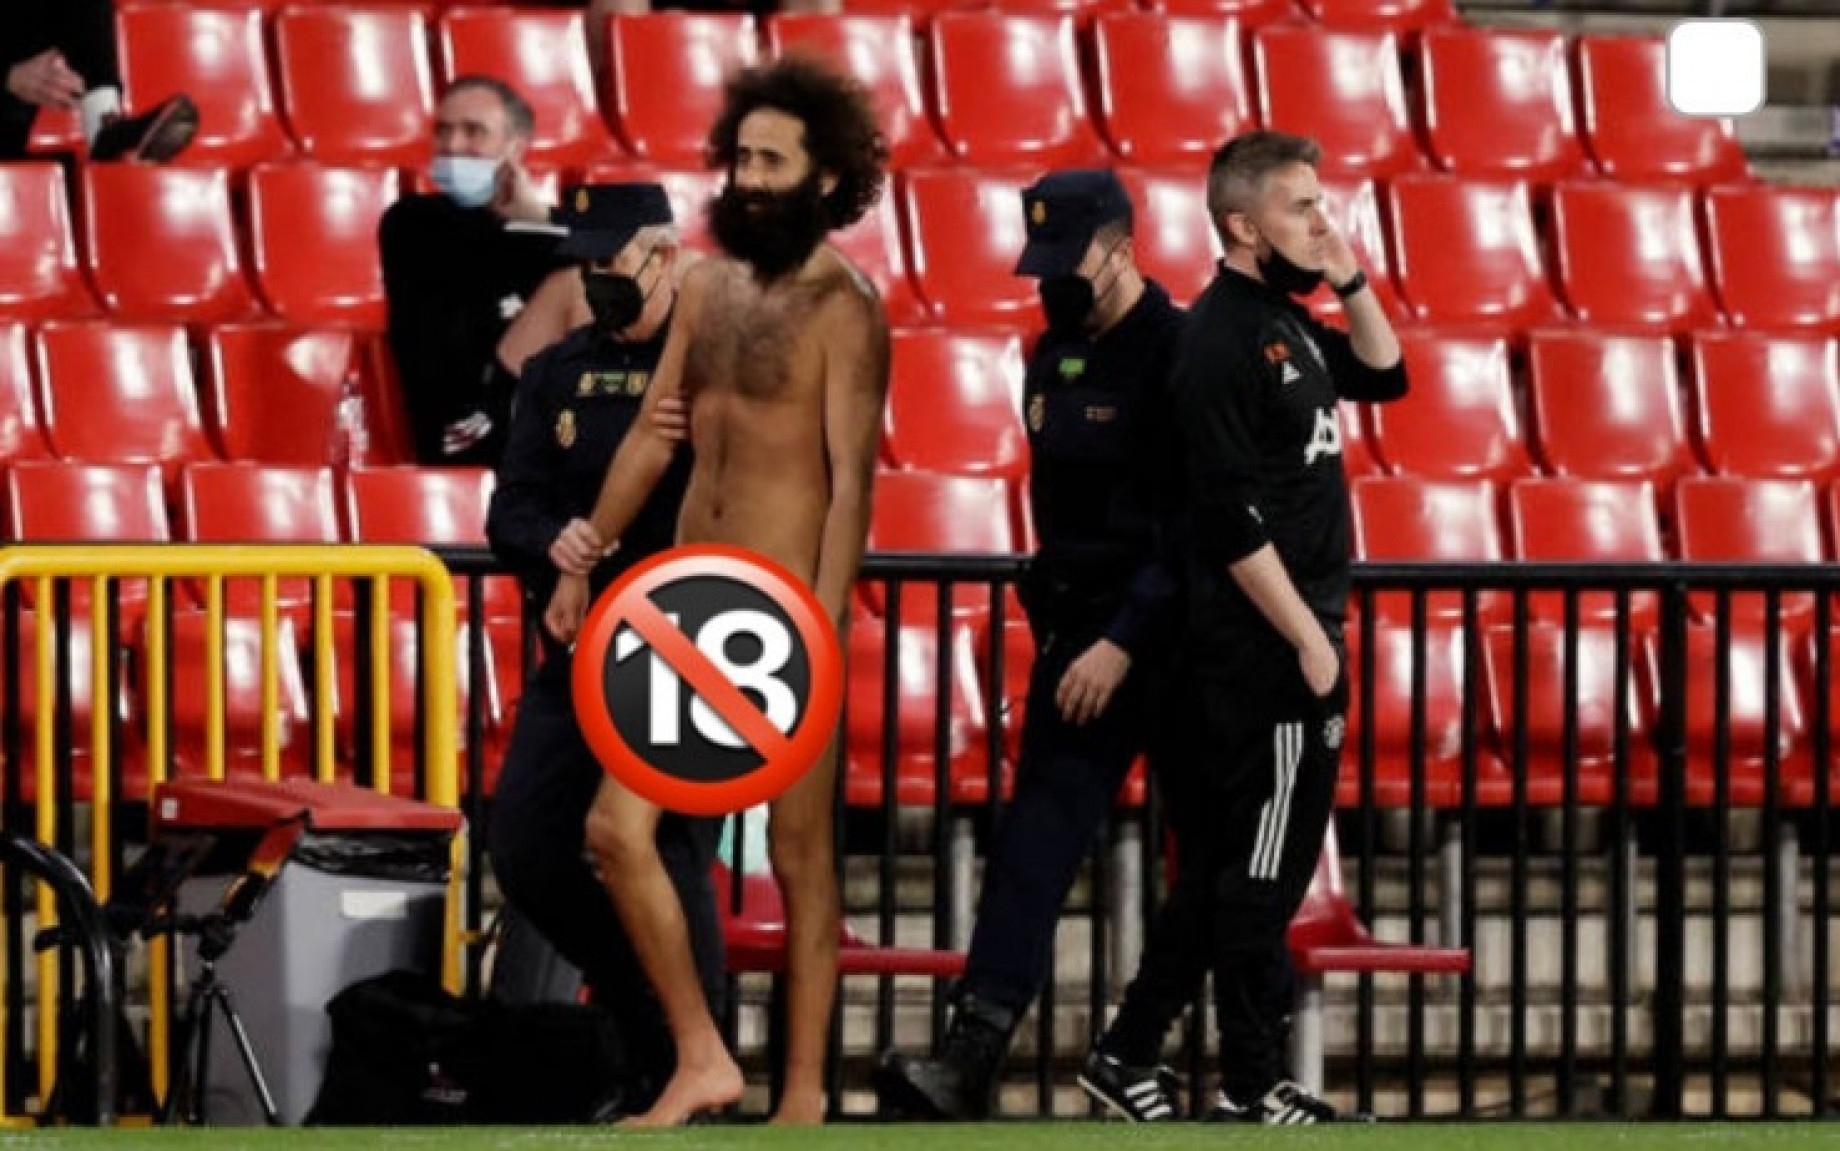 Granada Manchester United uomo nudo.jpg